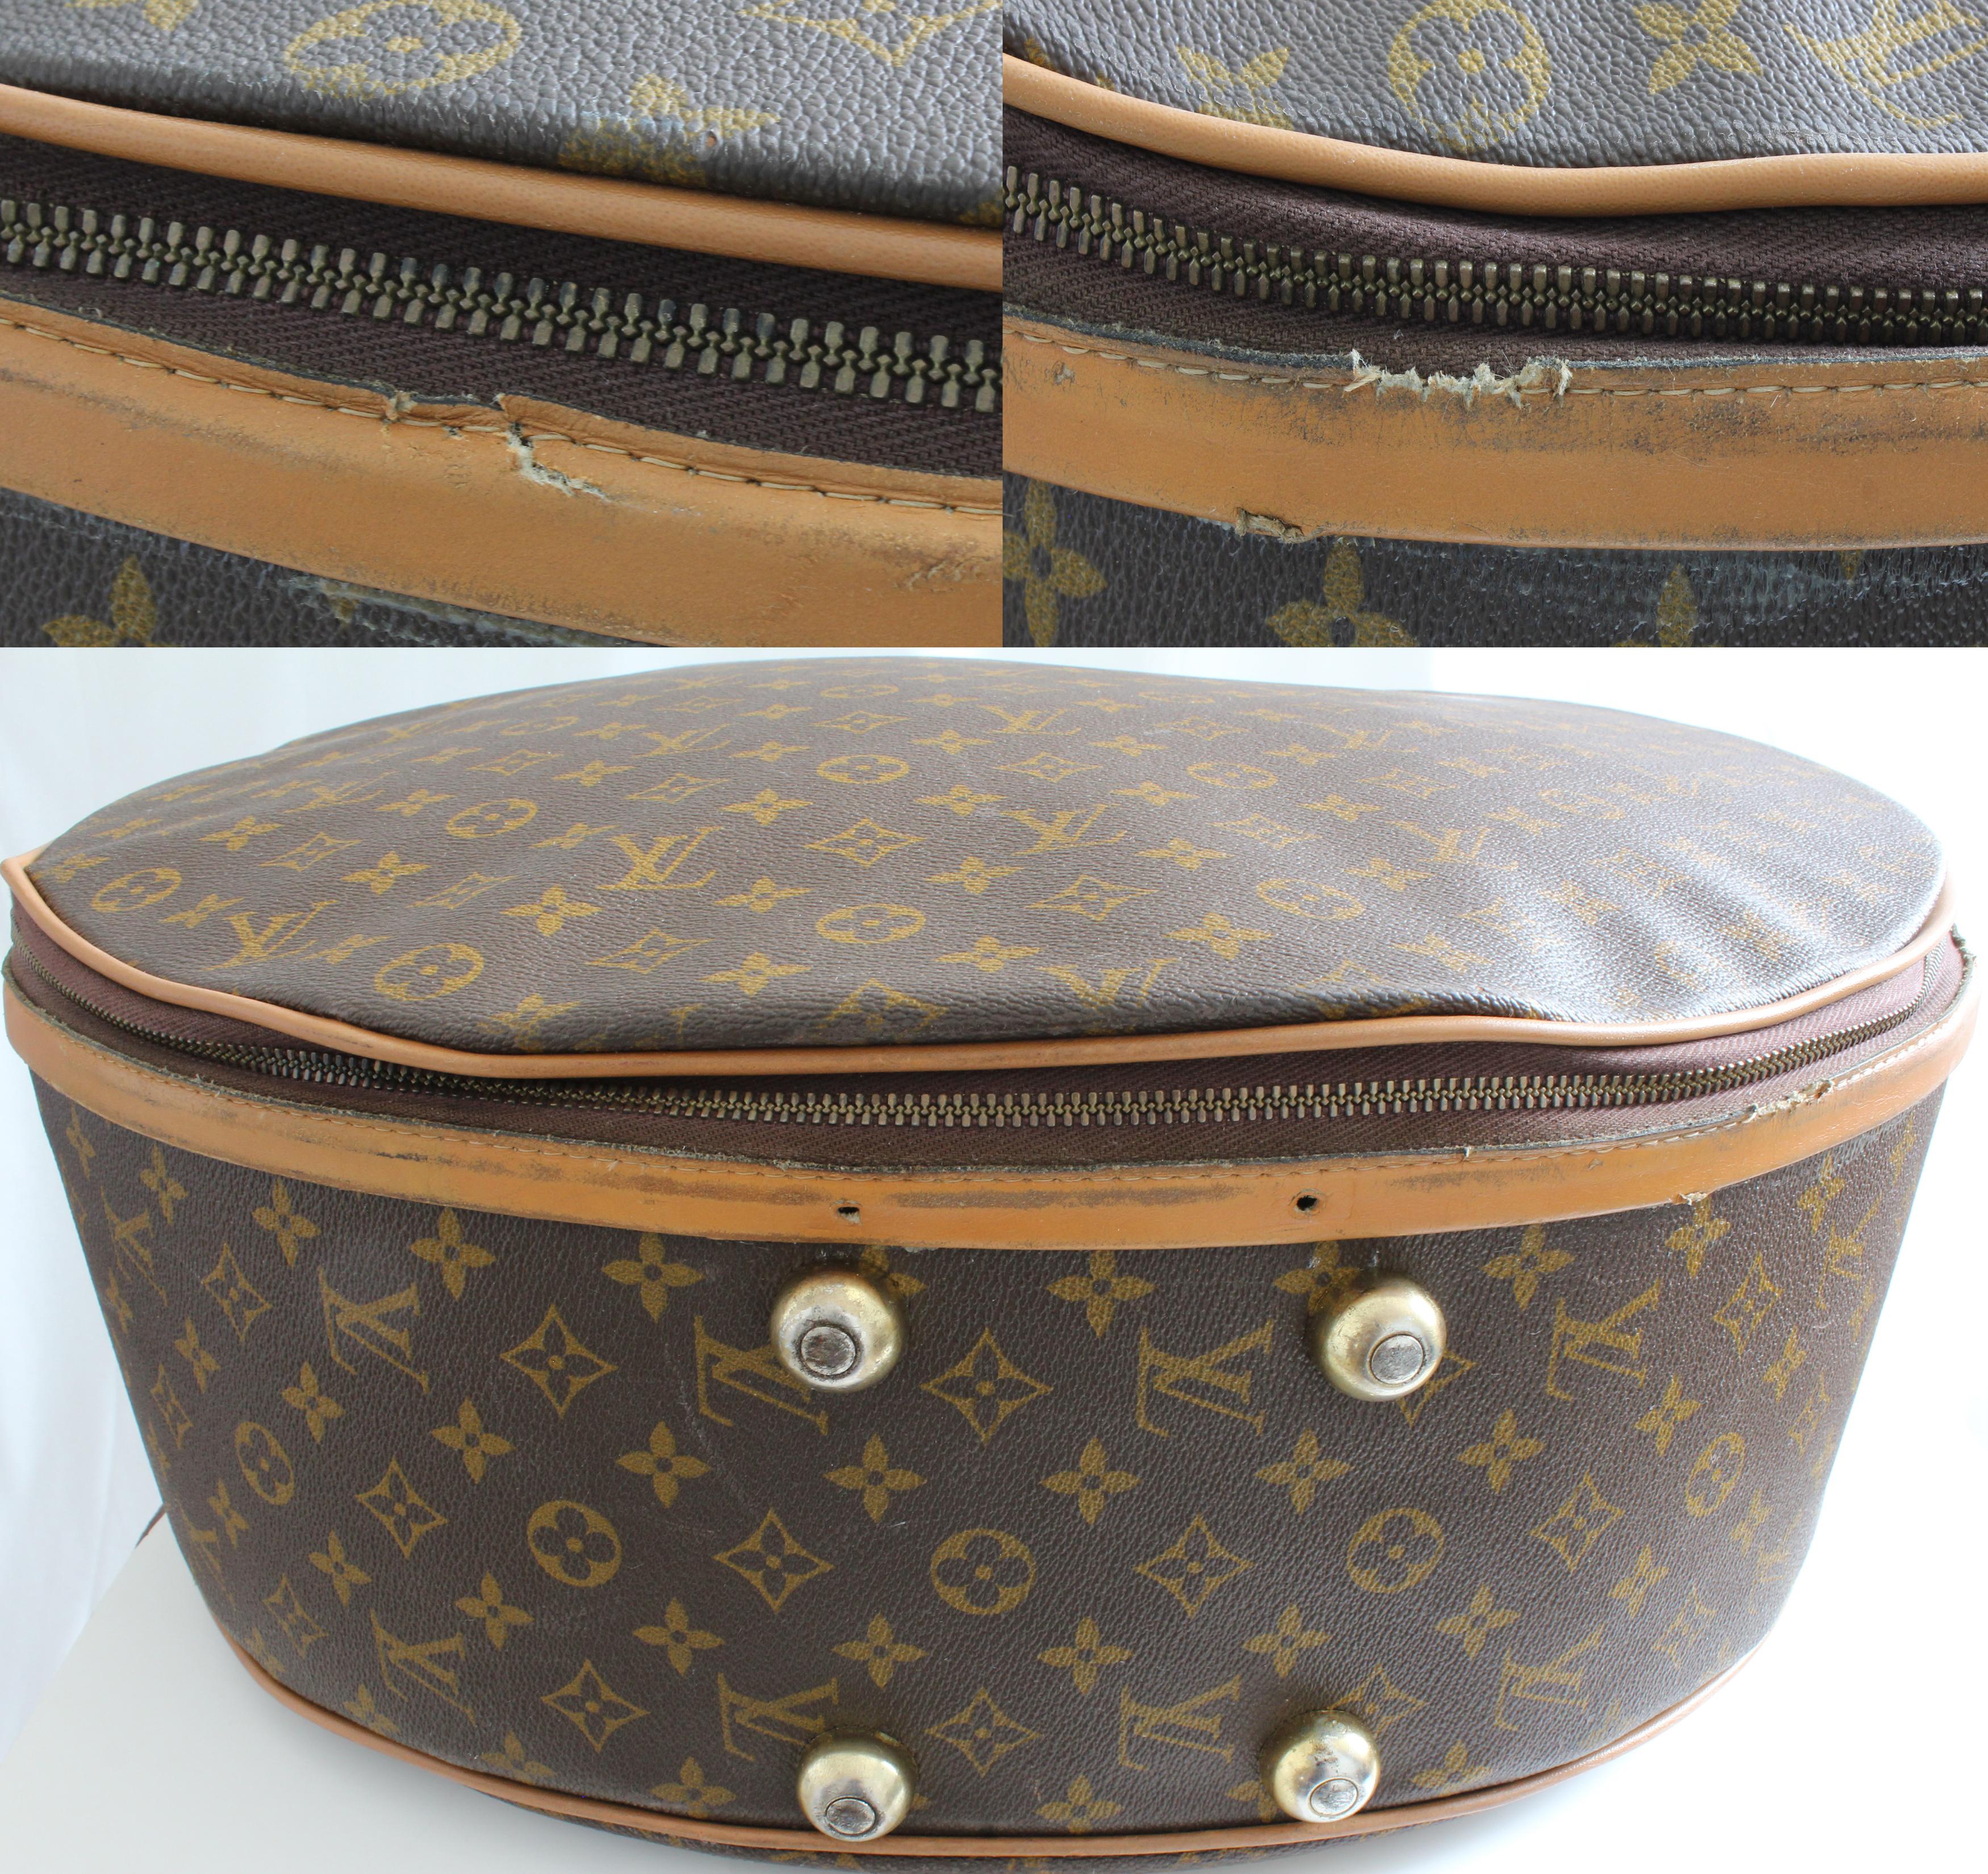 Louis Vuitton The French Company Boite Chapeaux Round Hat Box 50cm Travel Bag  2